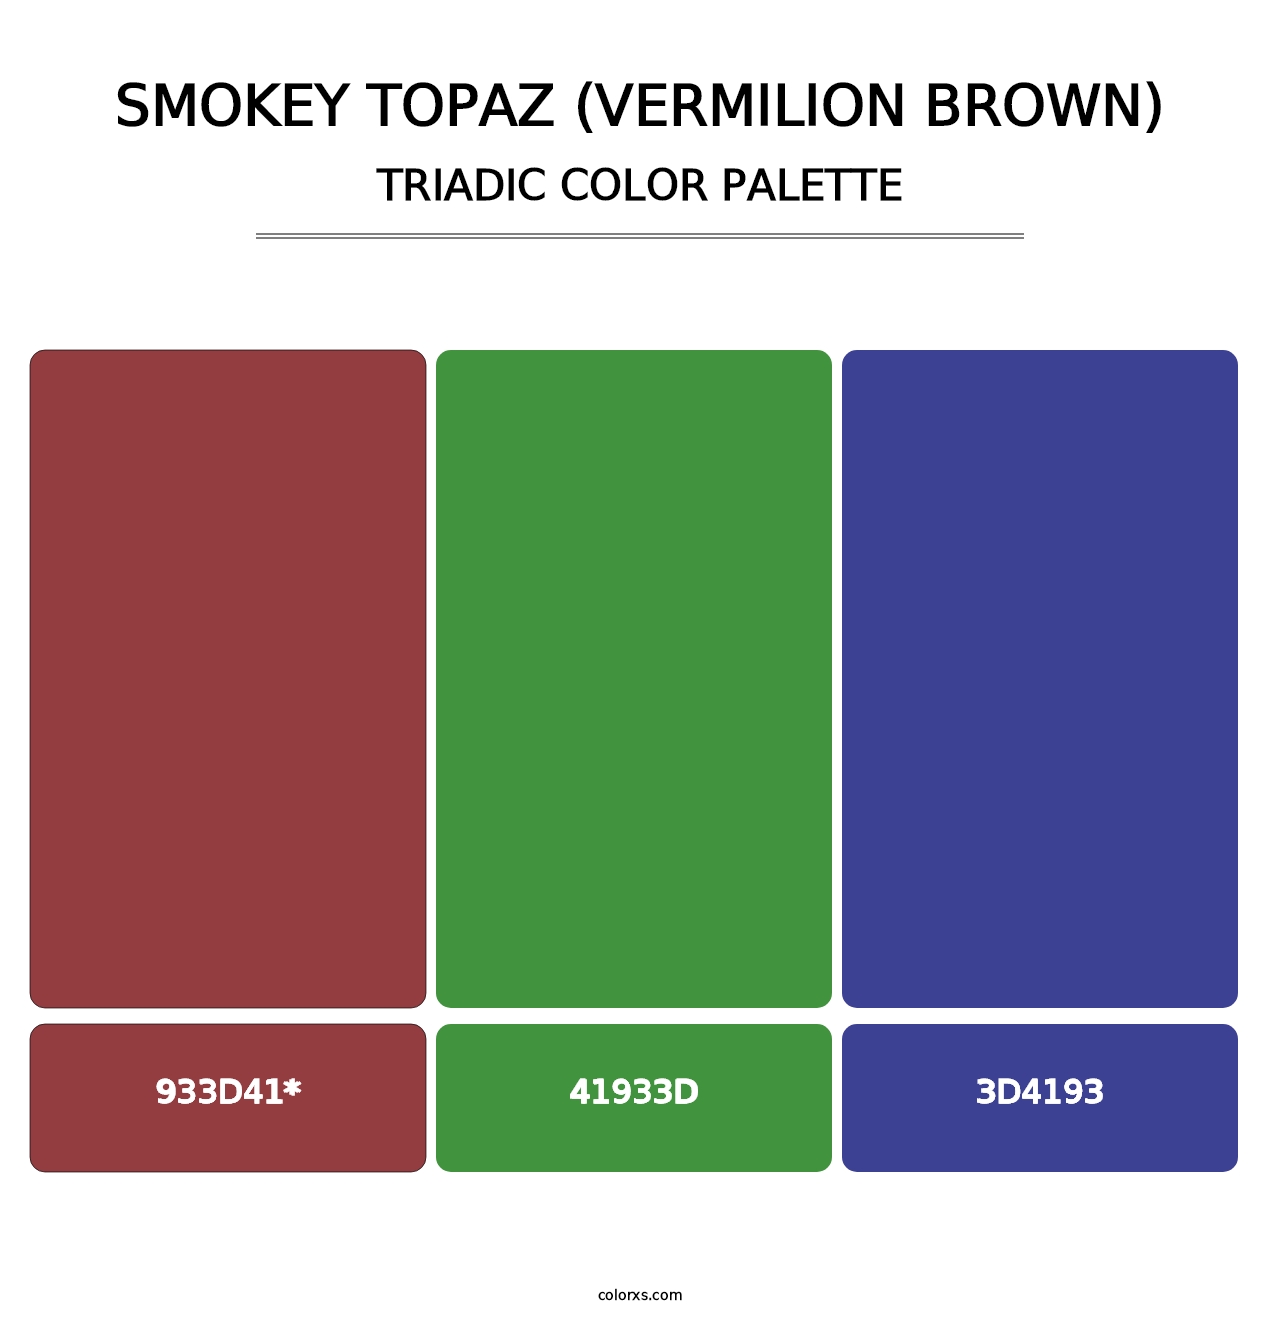 Smokey Topaz (Vermilion Brown) - Triadic Color Palette